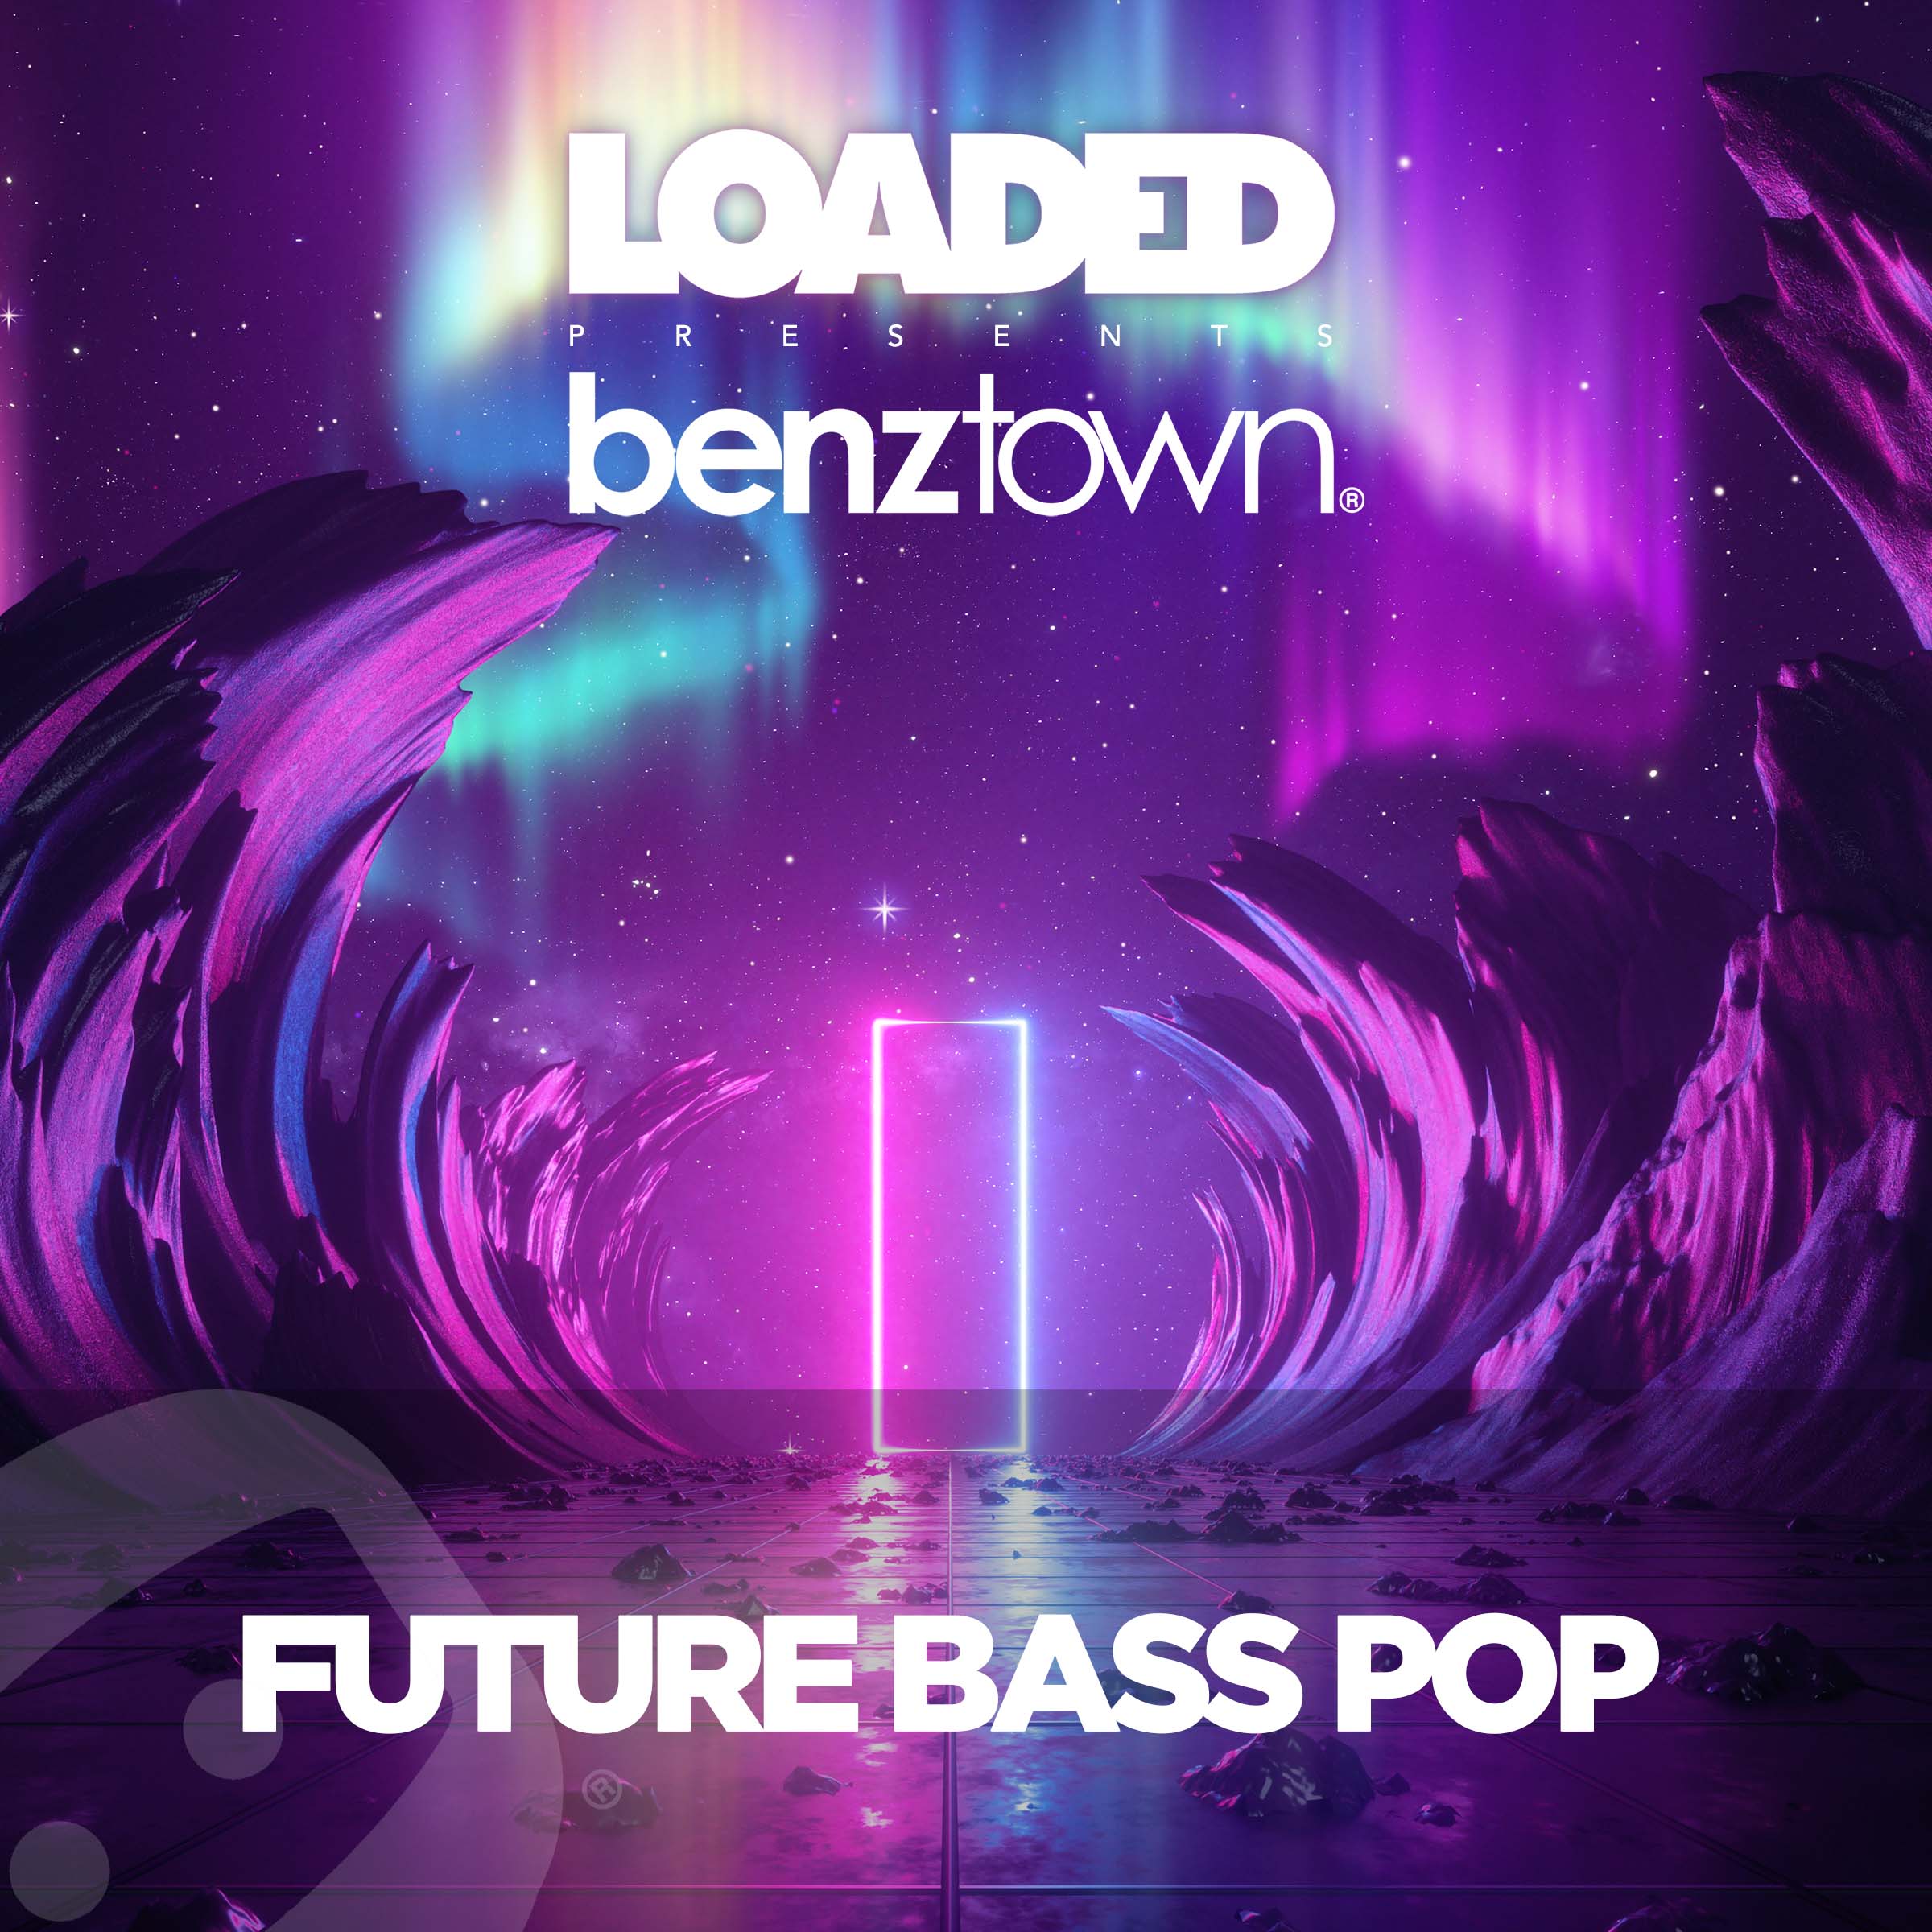 LPM 843 - Future Bass Pop - Album Cover